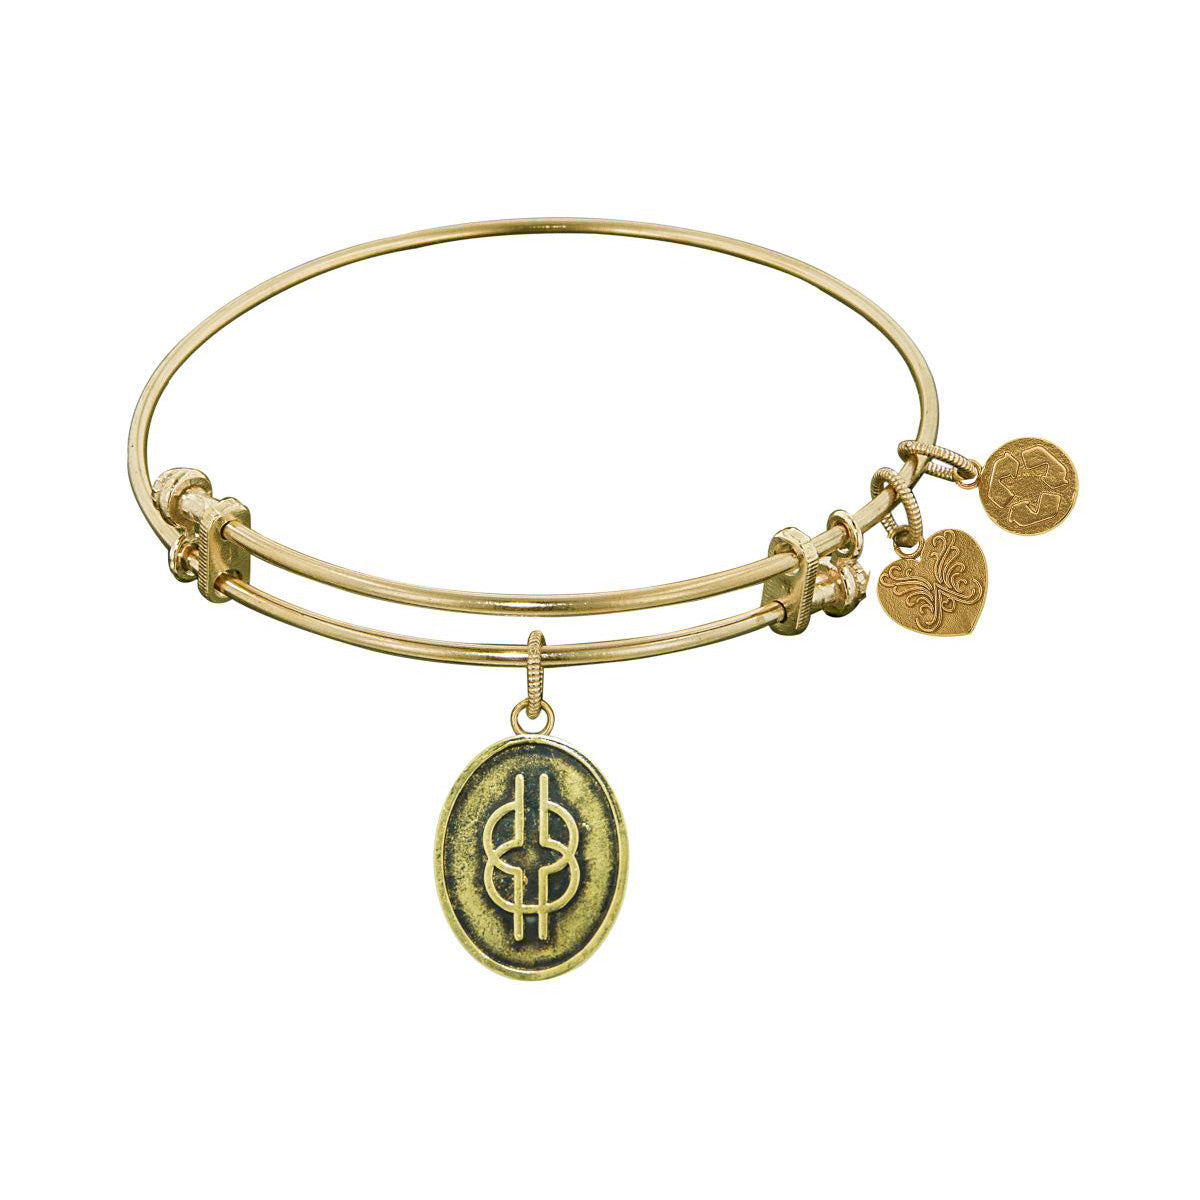 Smooth Finish Brass Wisdom Knot Angelica Bangle Bracelet, 7.25" fine designer jewelry for men and women